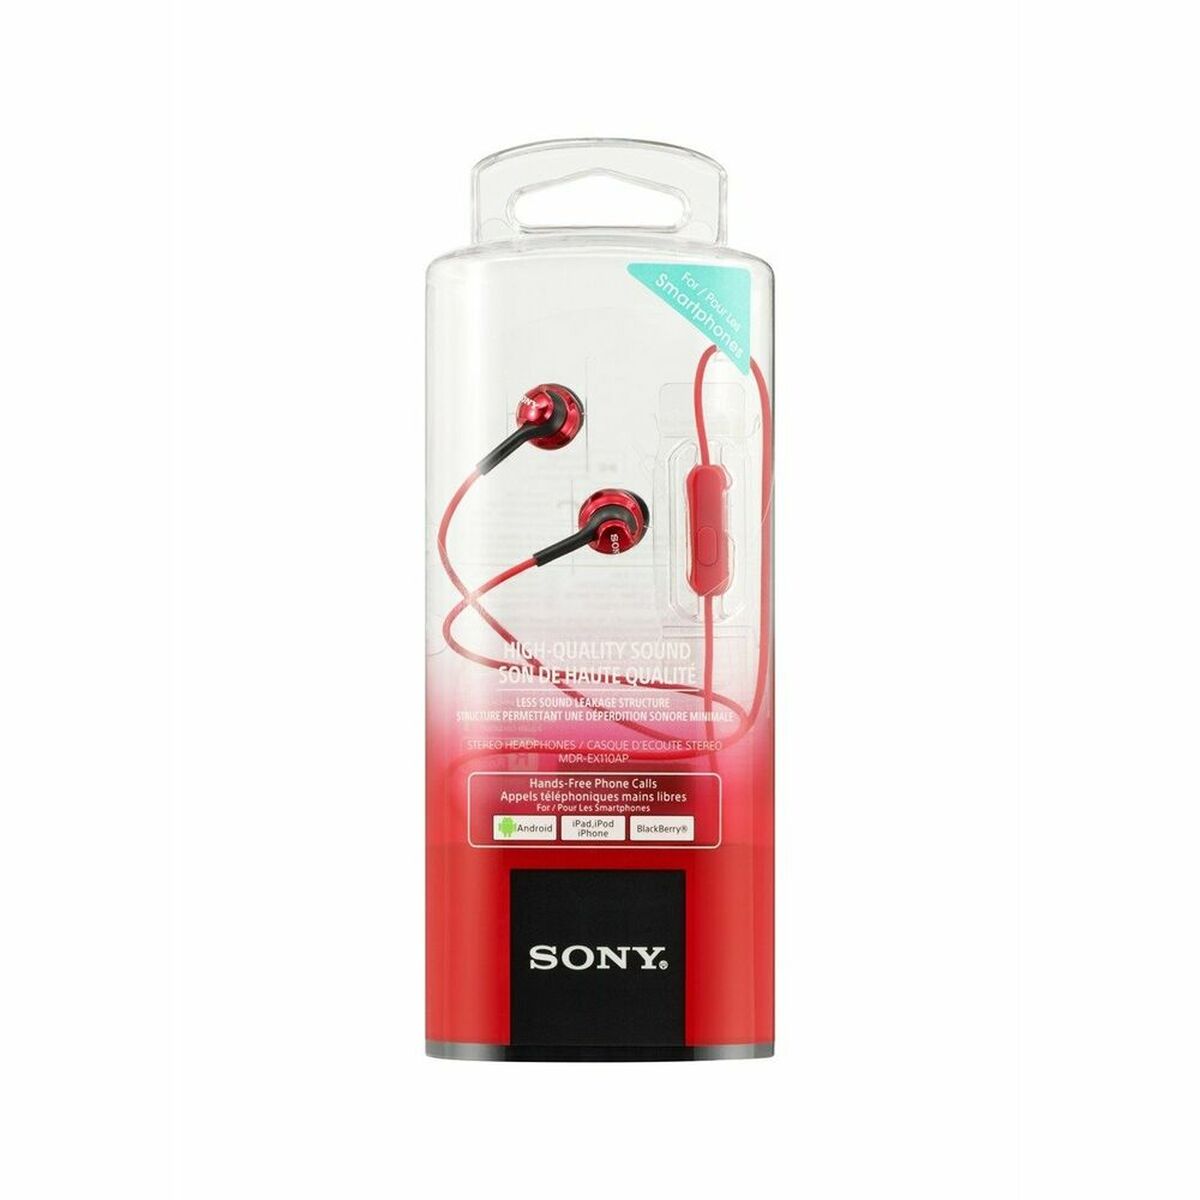 Auriculares Com Microfone Sony Mdr-ex110ap Vermelho - Auriculares com microfone | Sport Zone MKP